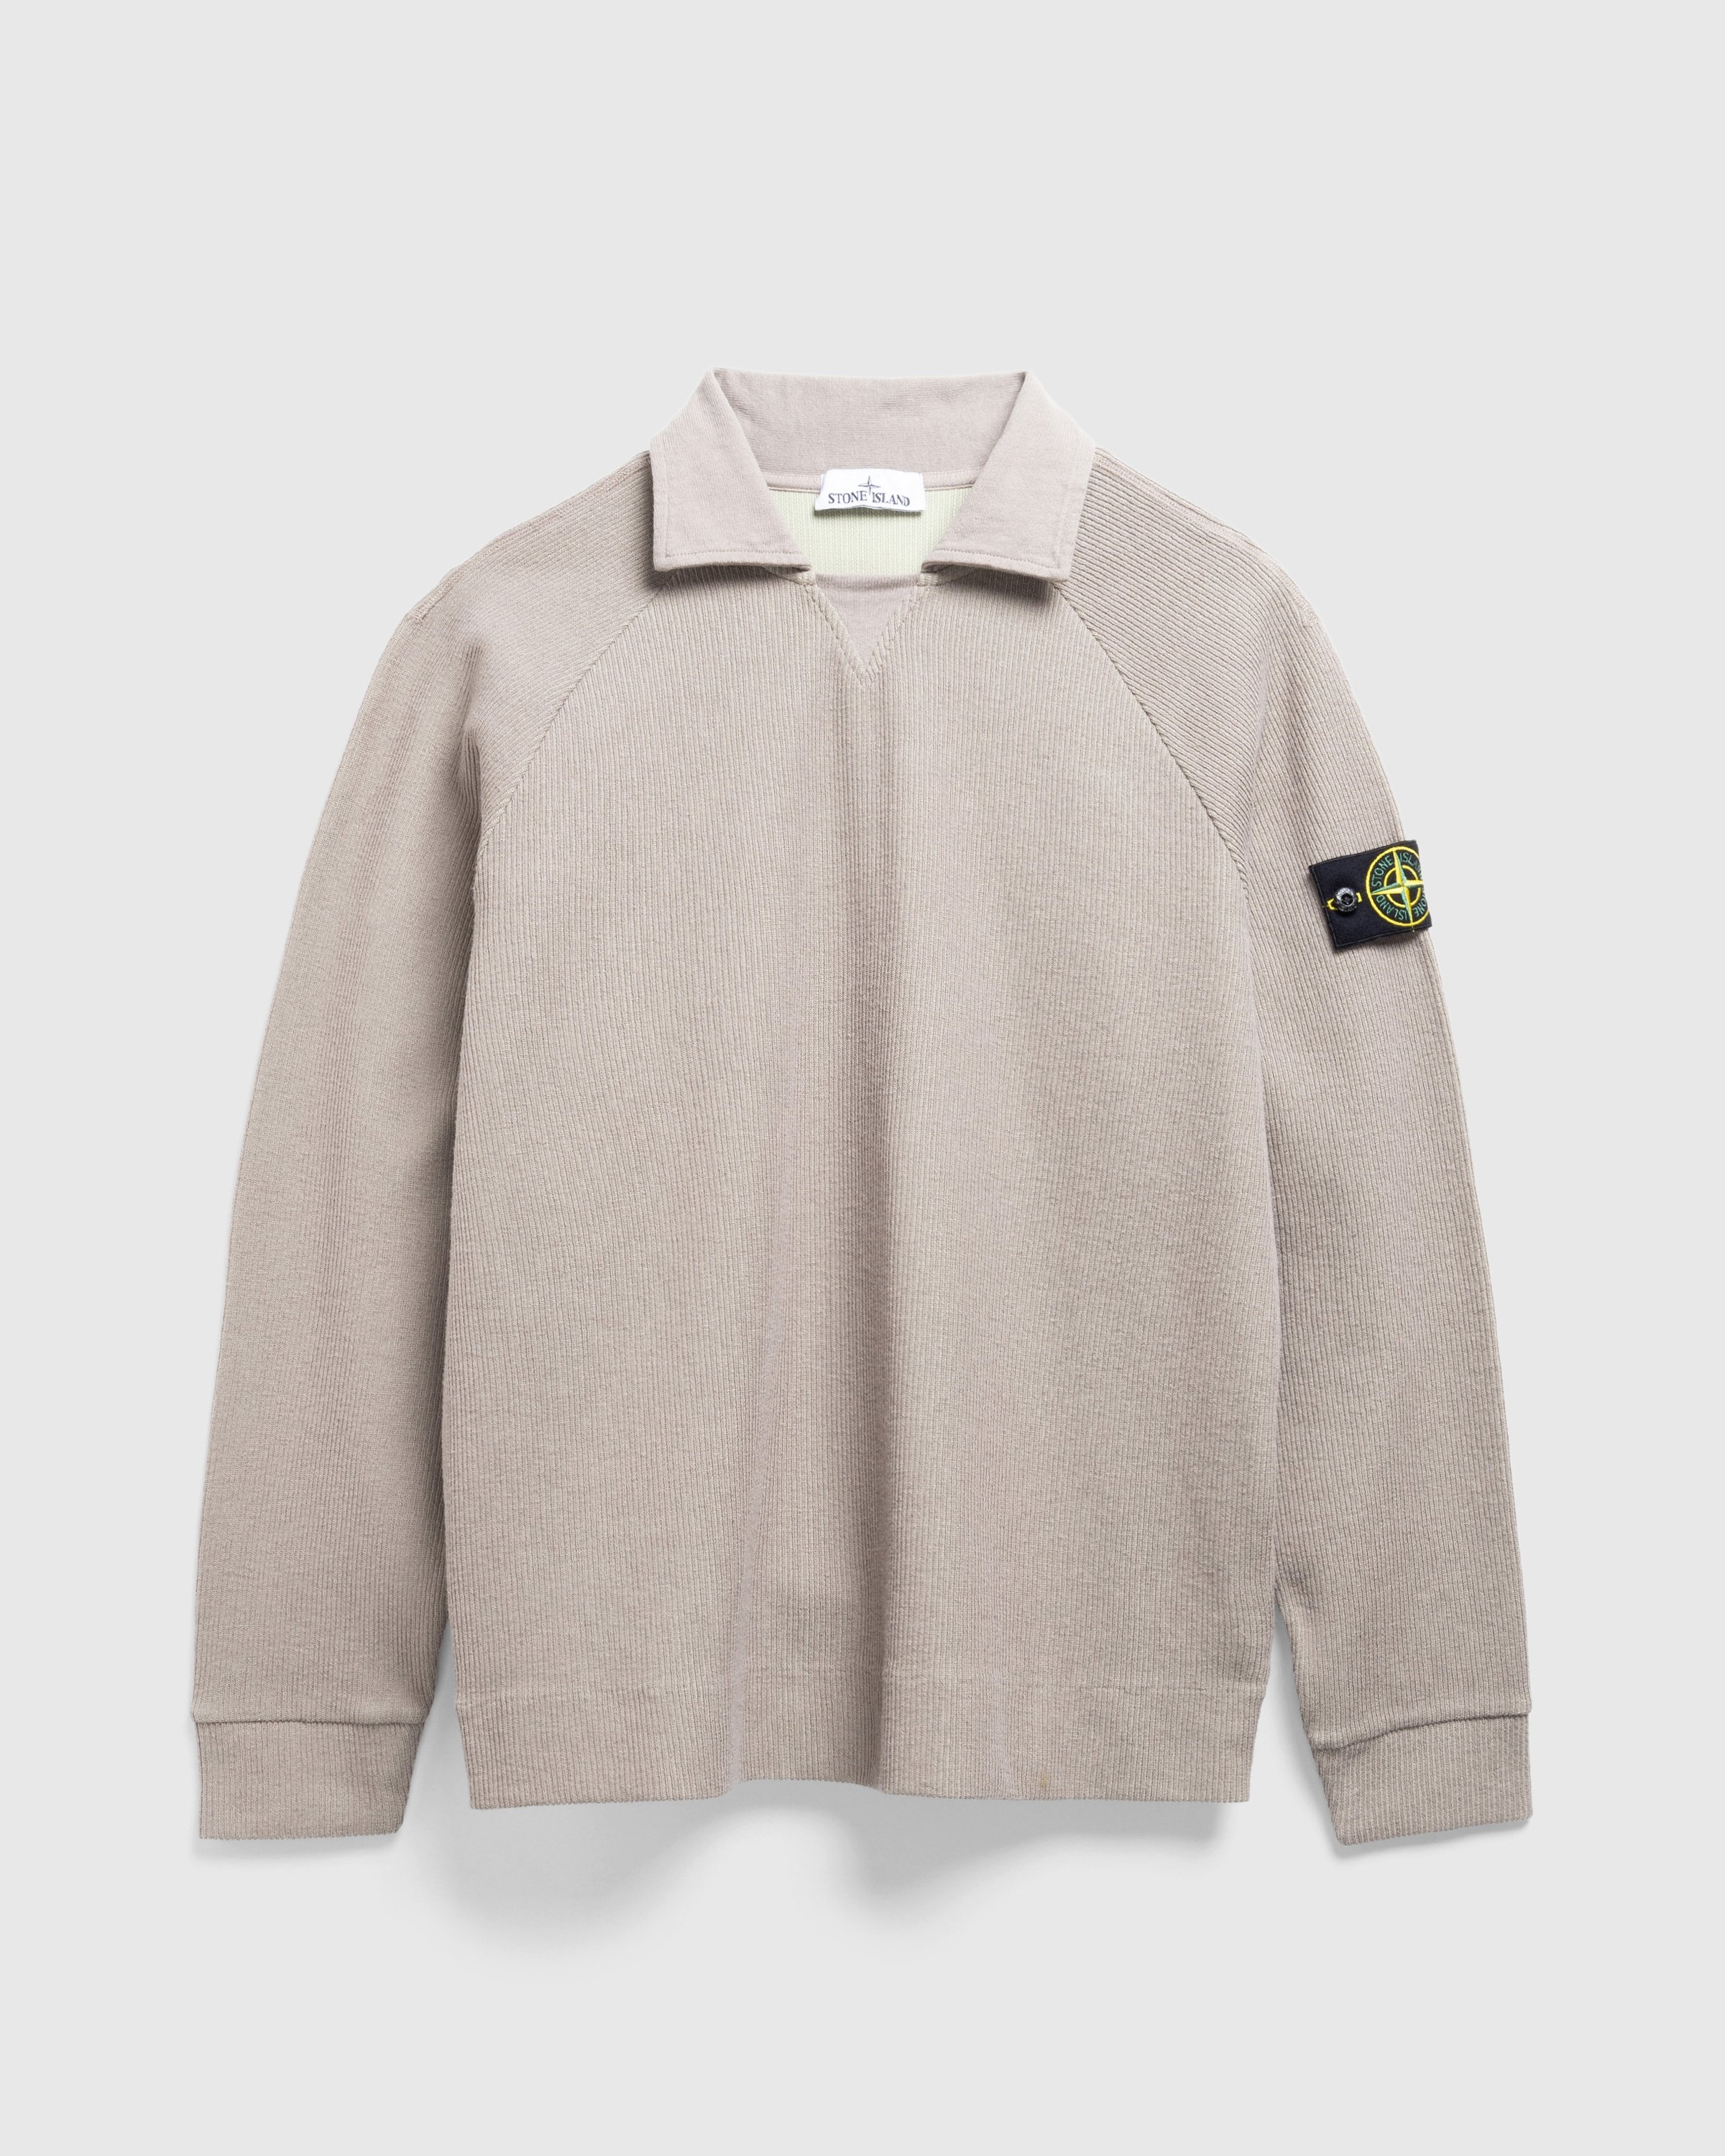 Stone Island – Spread Collar Knit Shirt Dove Gray | Highsnobiety Shop